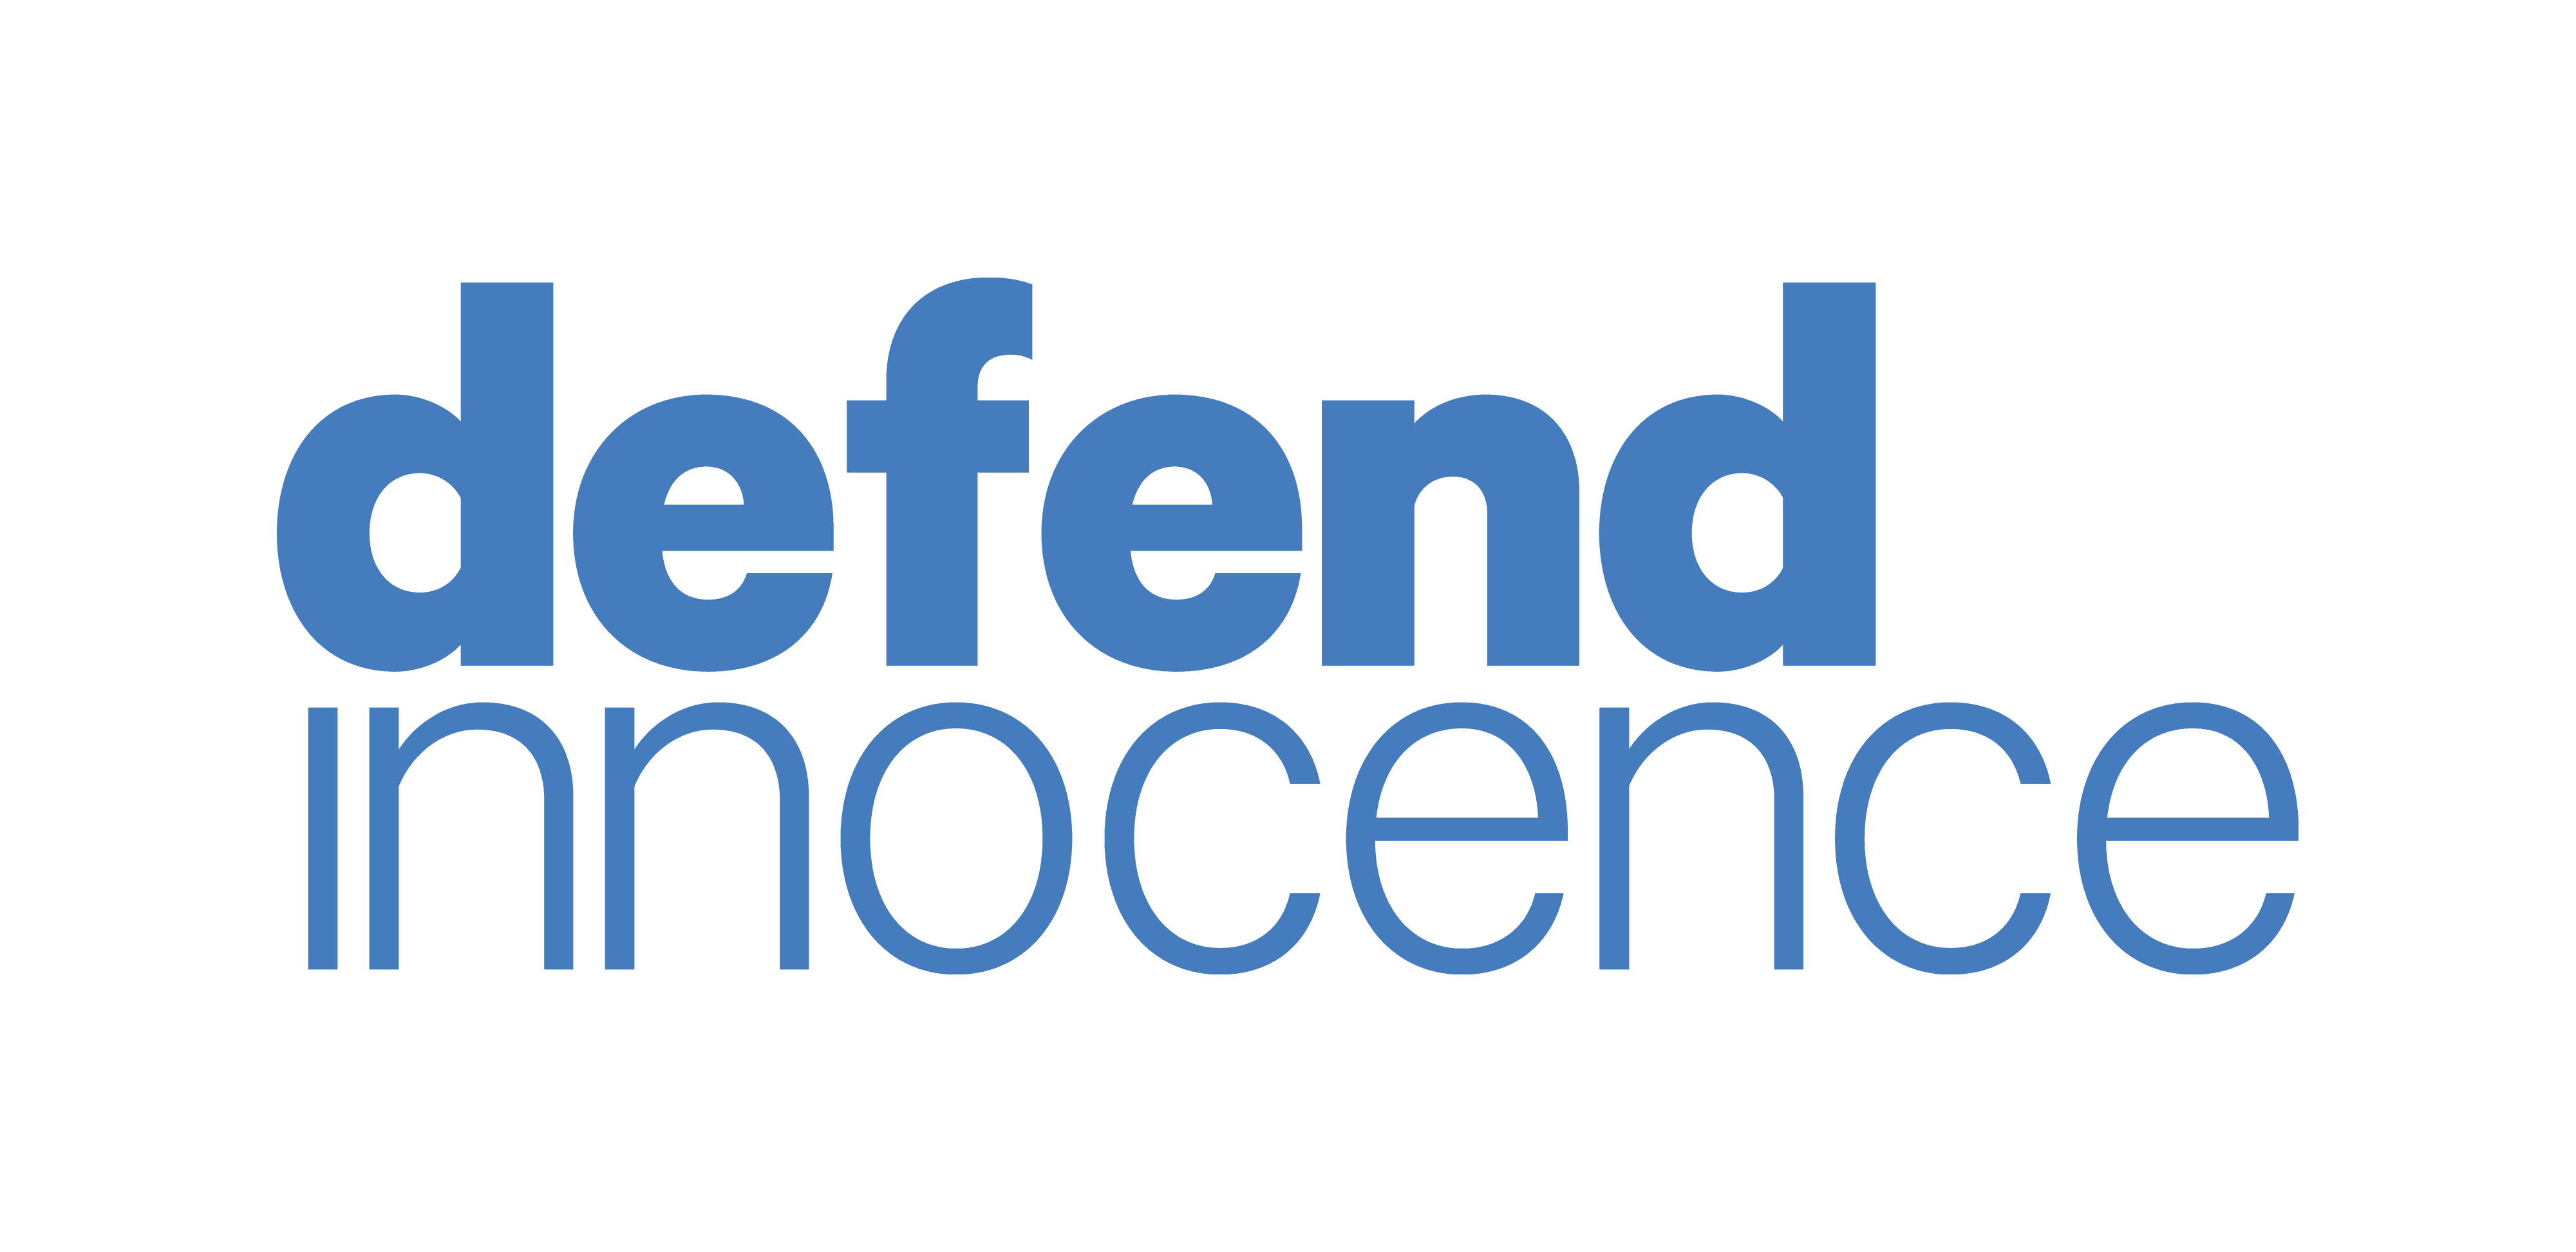 Community Outreach Defend Innocence